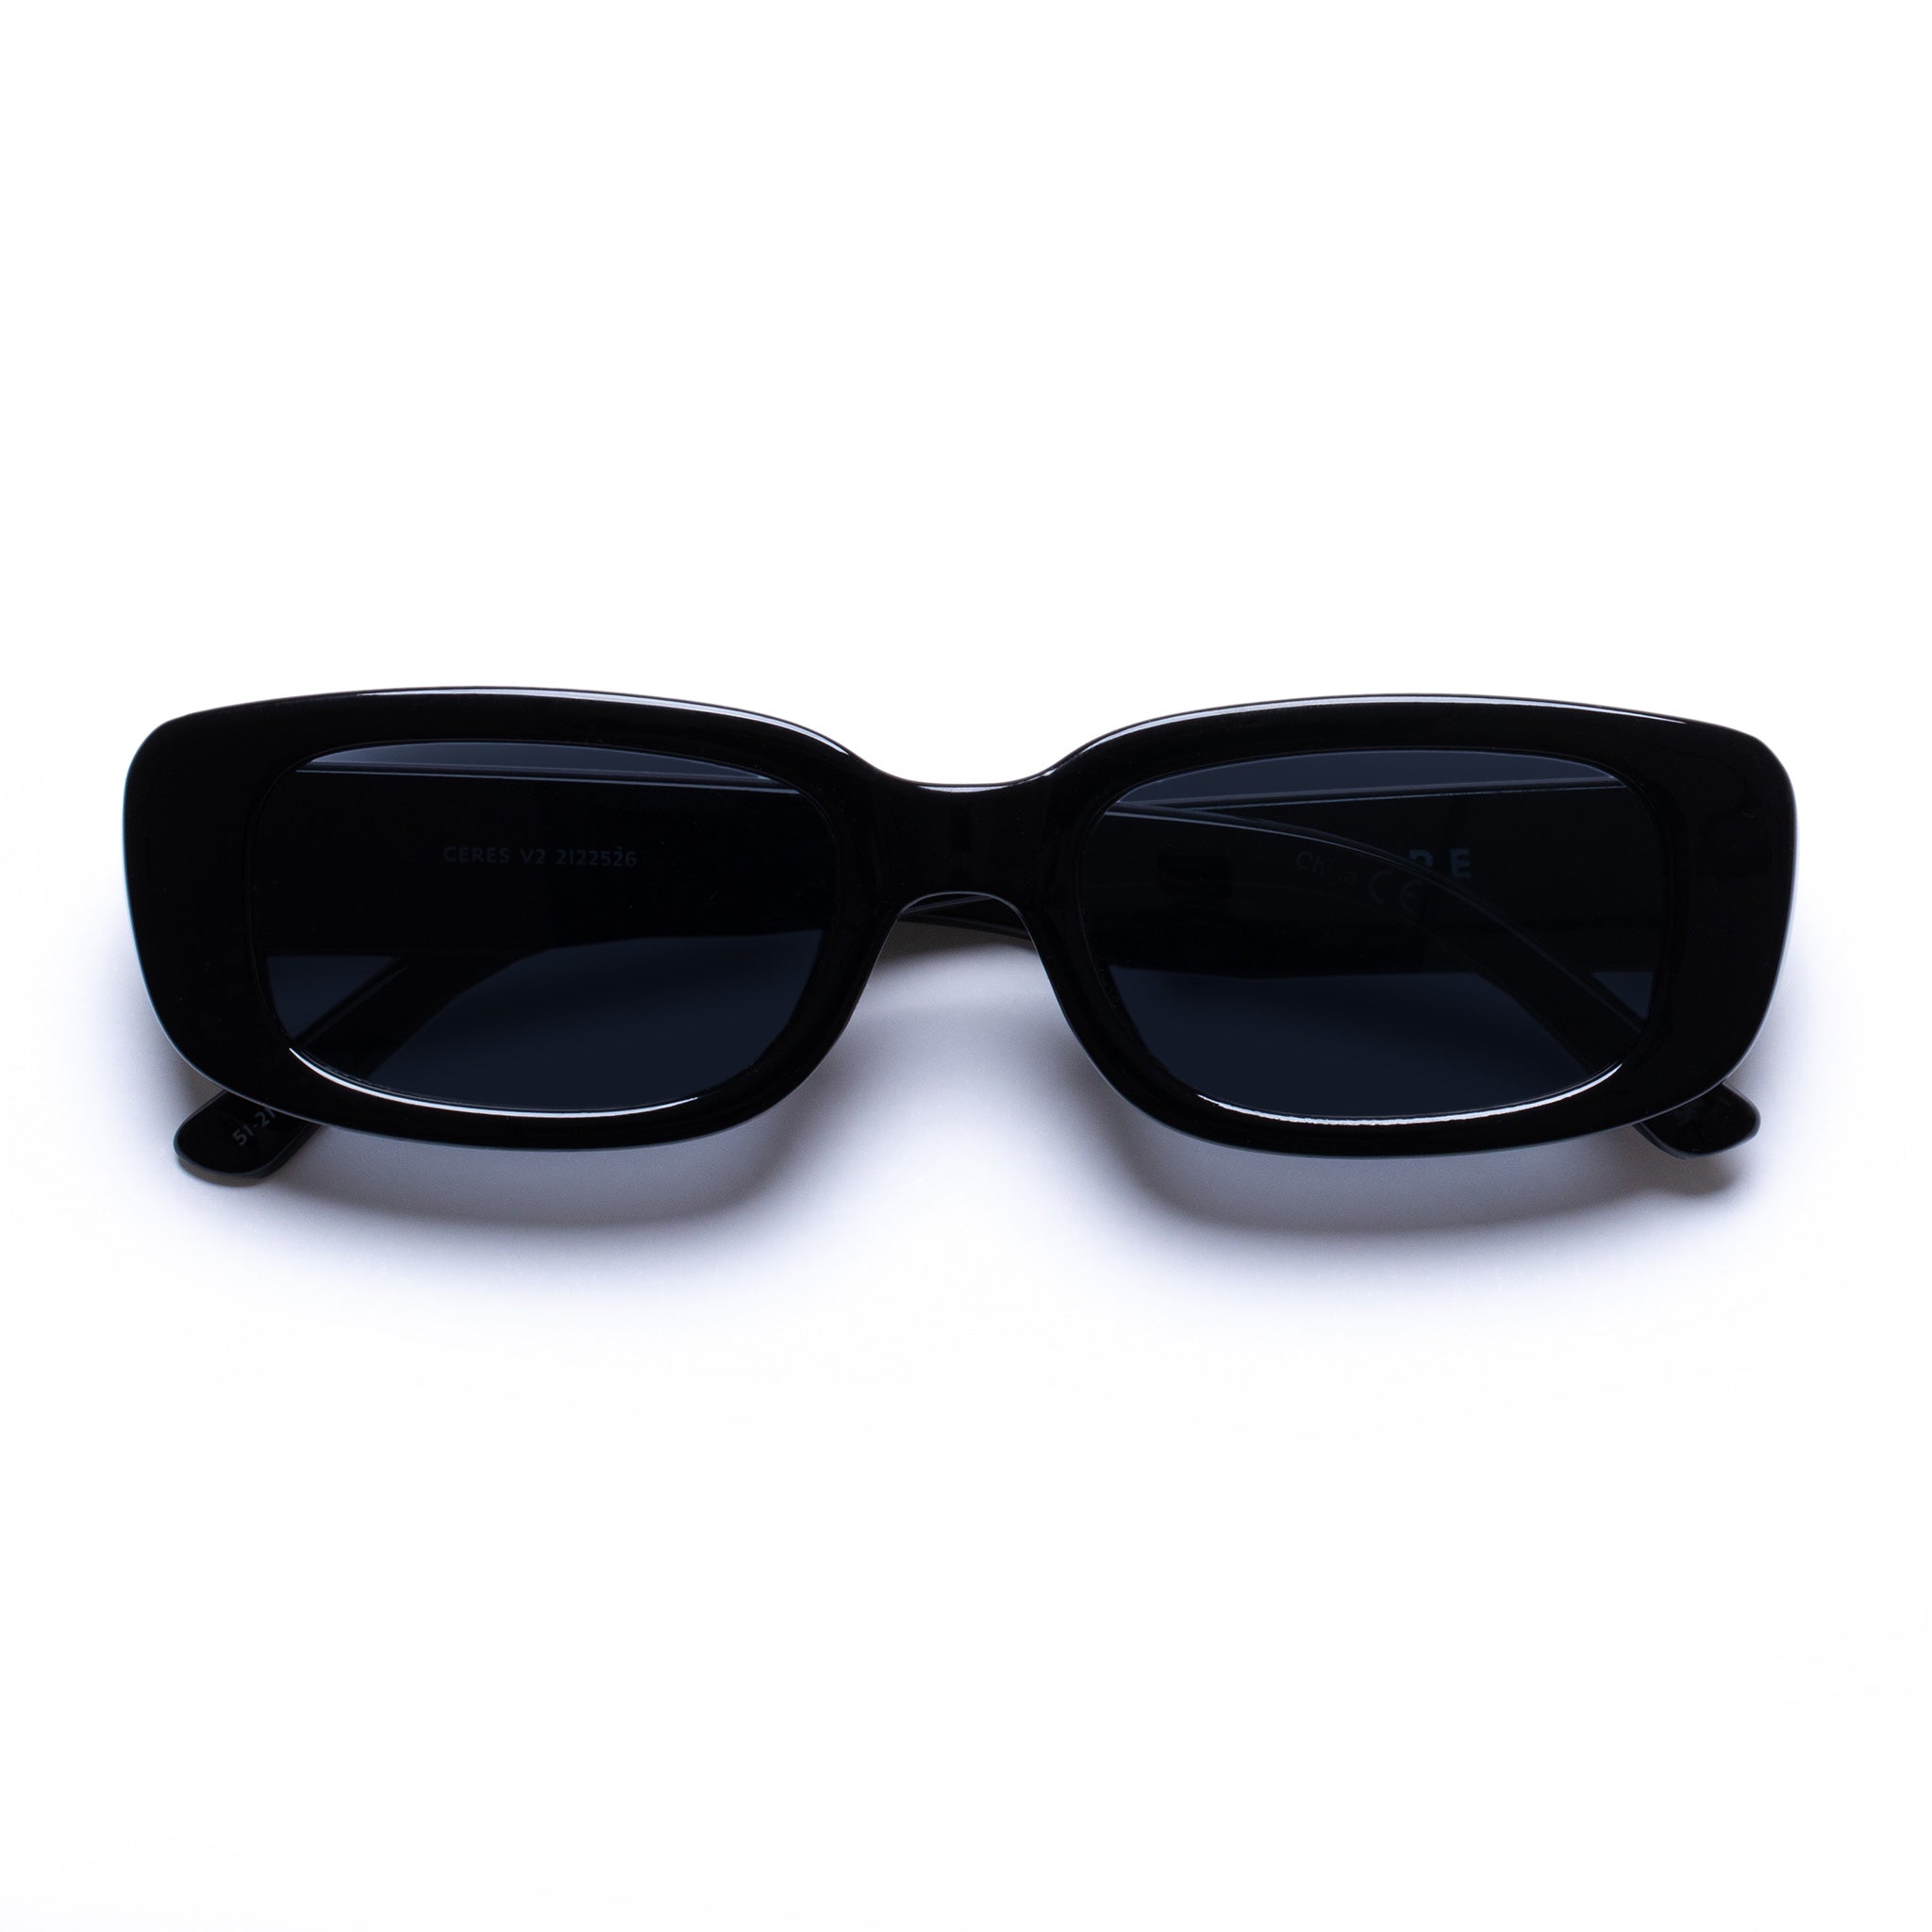 BLACK LAATEST RECTANGULAR SUNGLASS SMALL at Rs 120 | Sunglasses in Sohna |  ID: 2851072340591